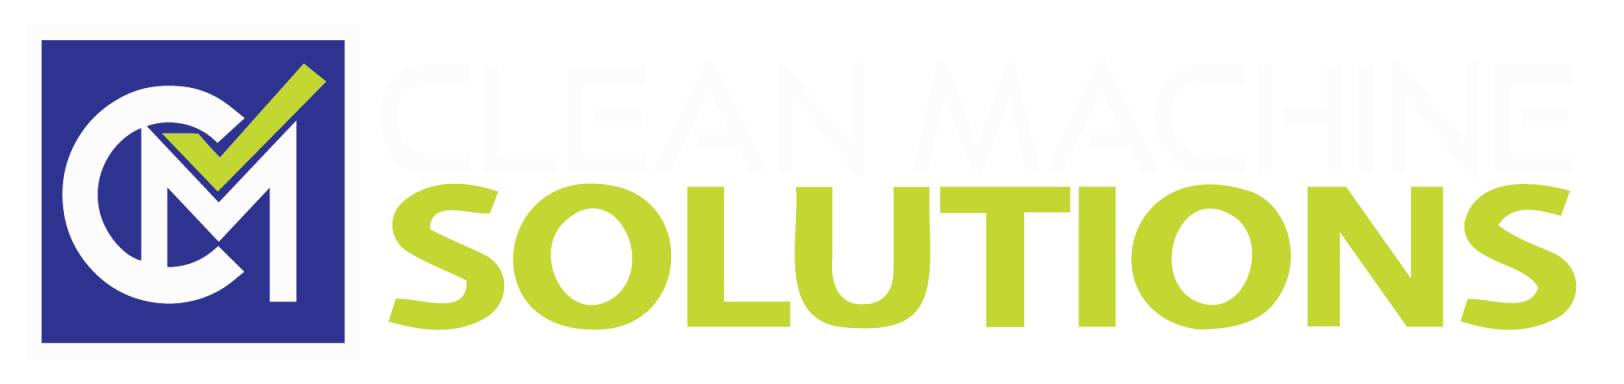 Clean Machine Solutions Logo